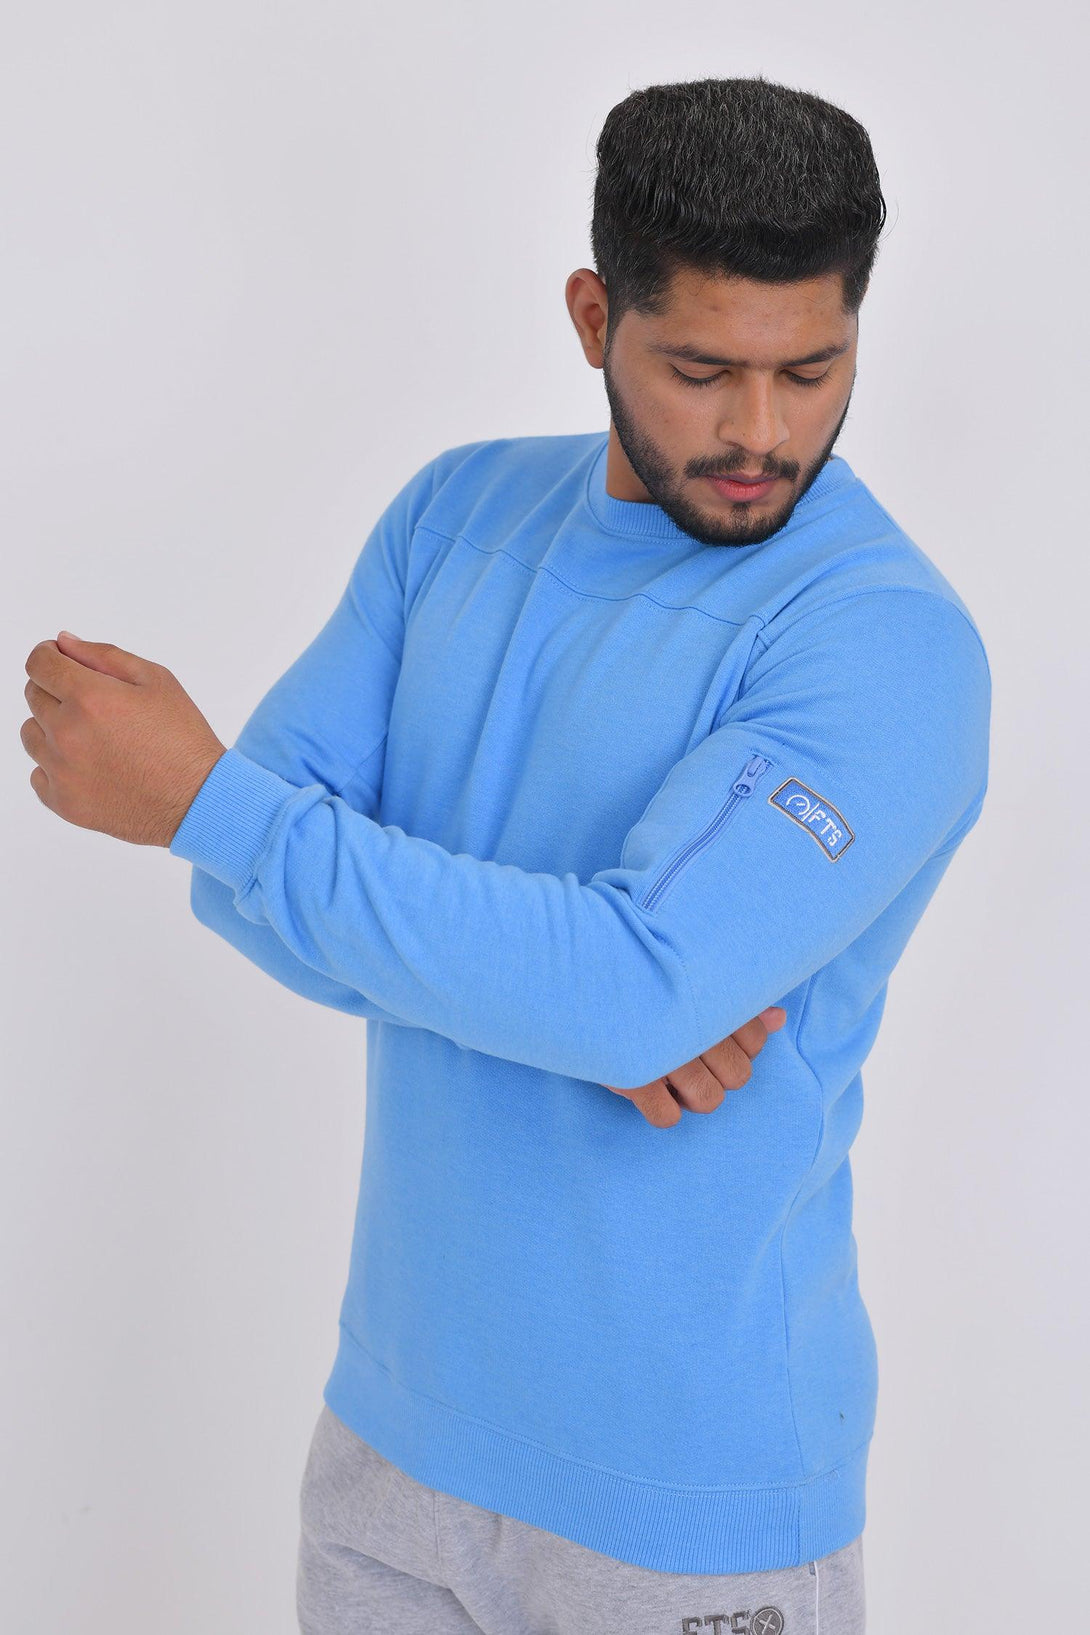 Sweatshirts | LIGHT BLUE - CHARCOAL - Pack of 2 - FTS